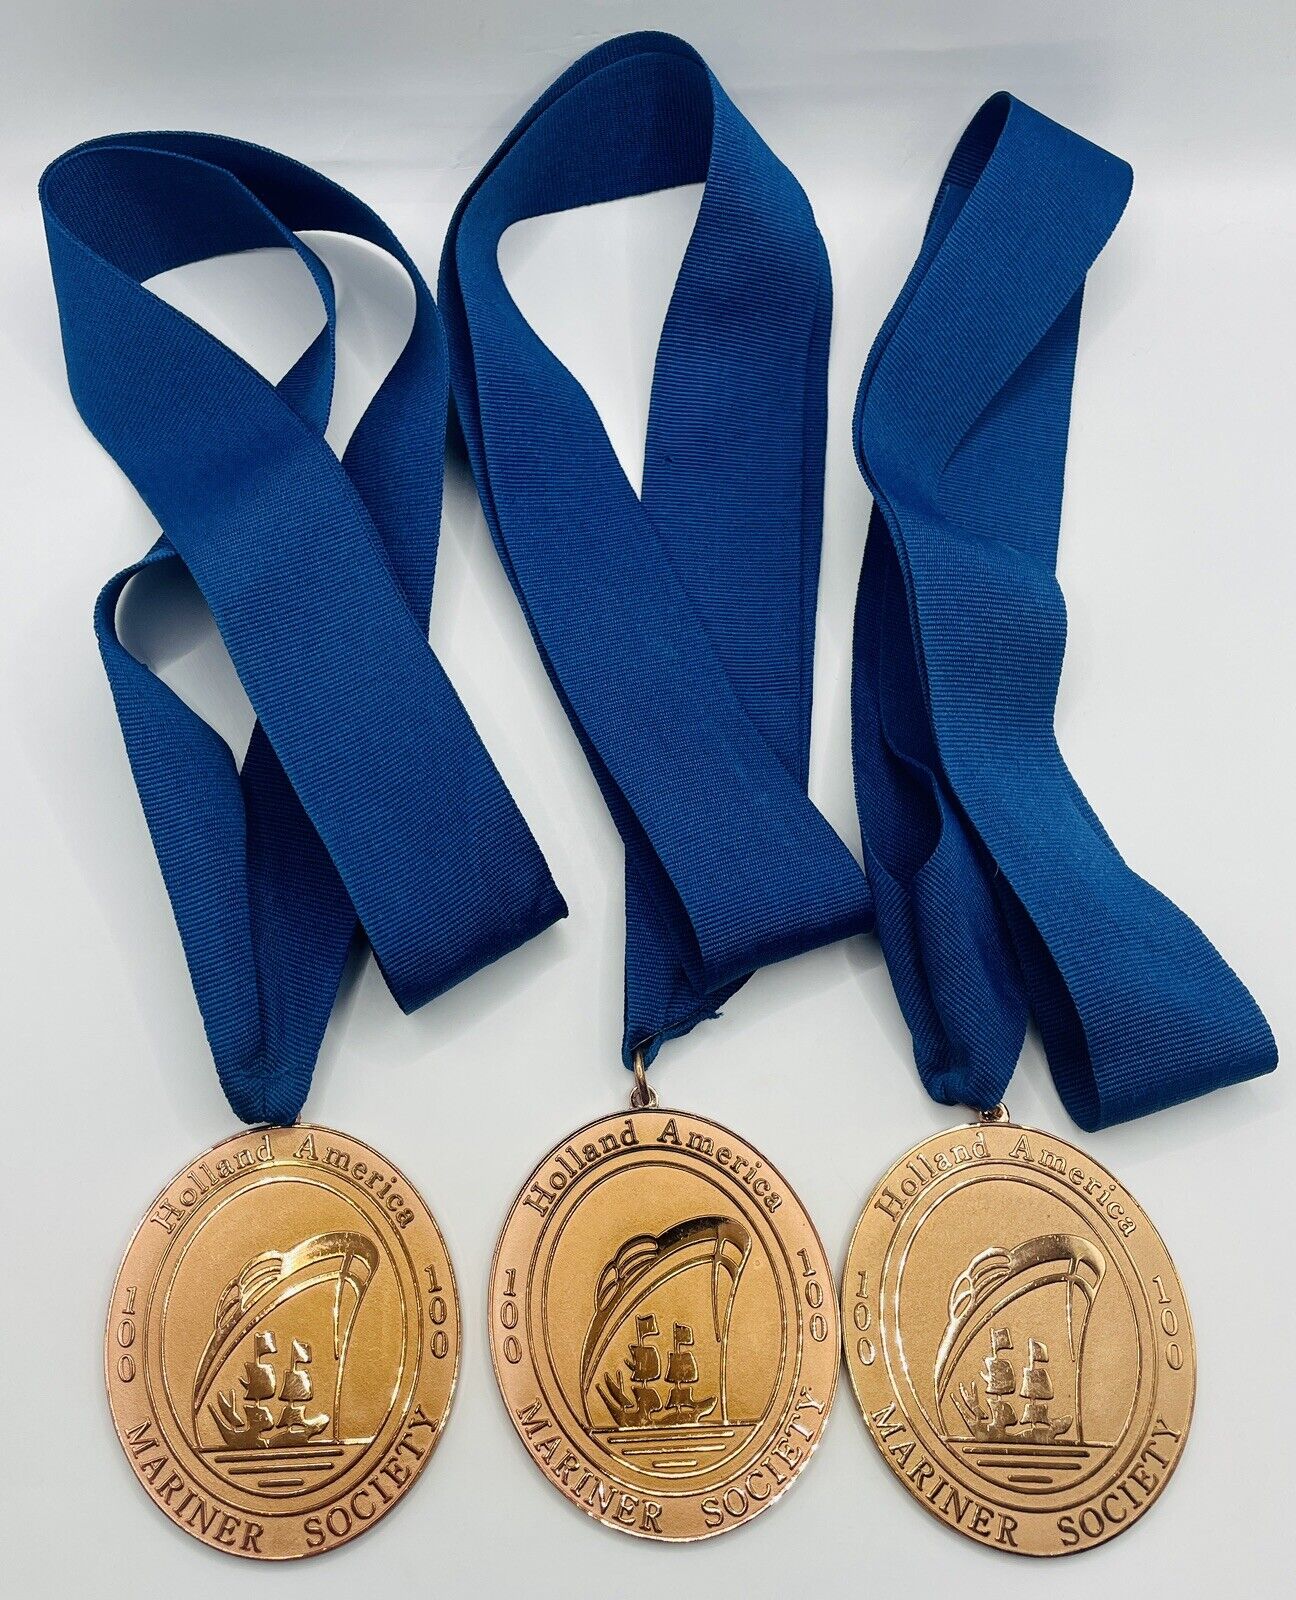 Set of 3 Holland America Mariner Society 100 Cruise Days Medallion Medals